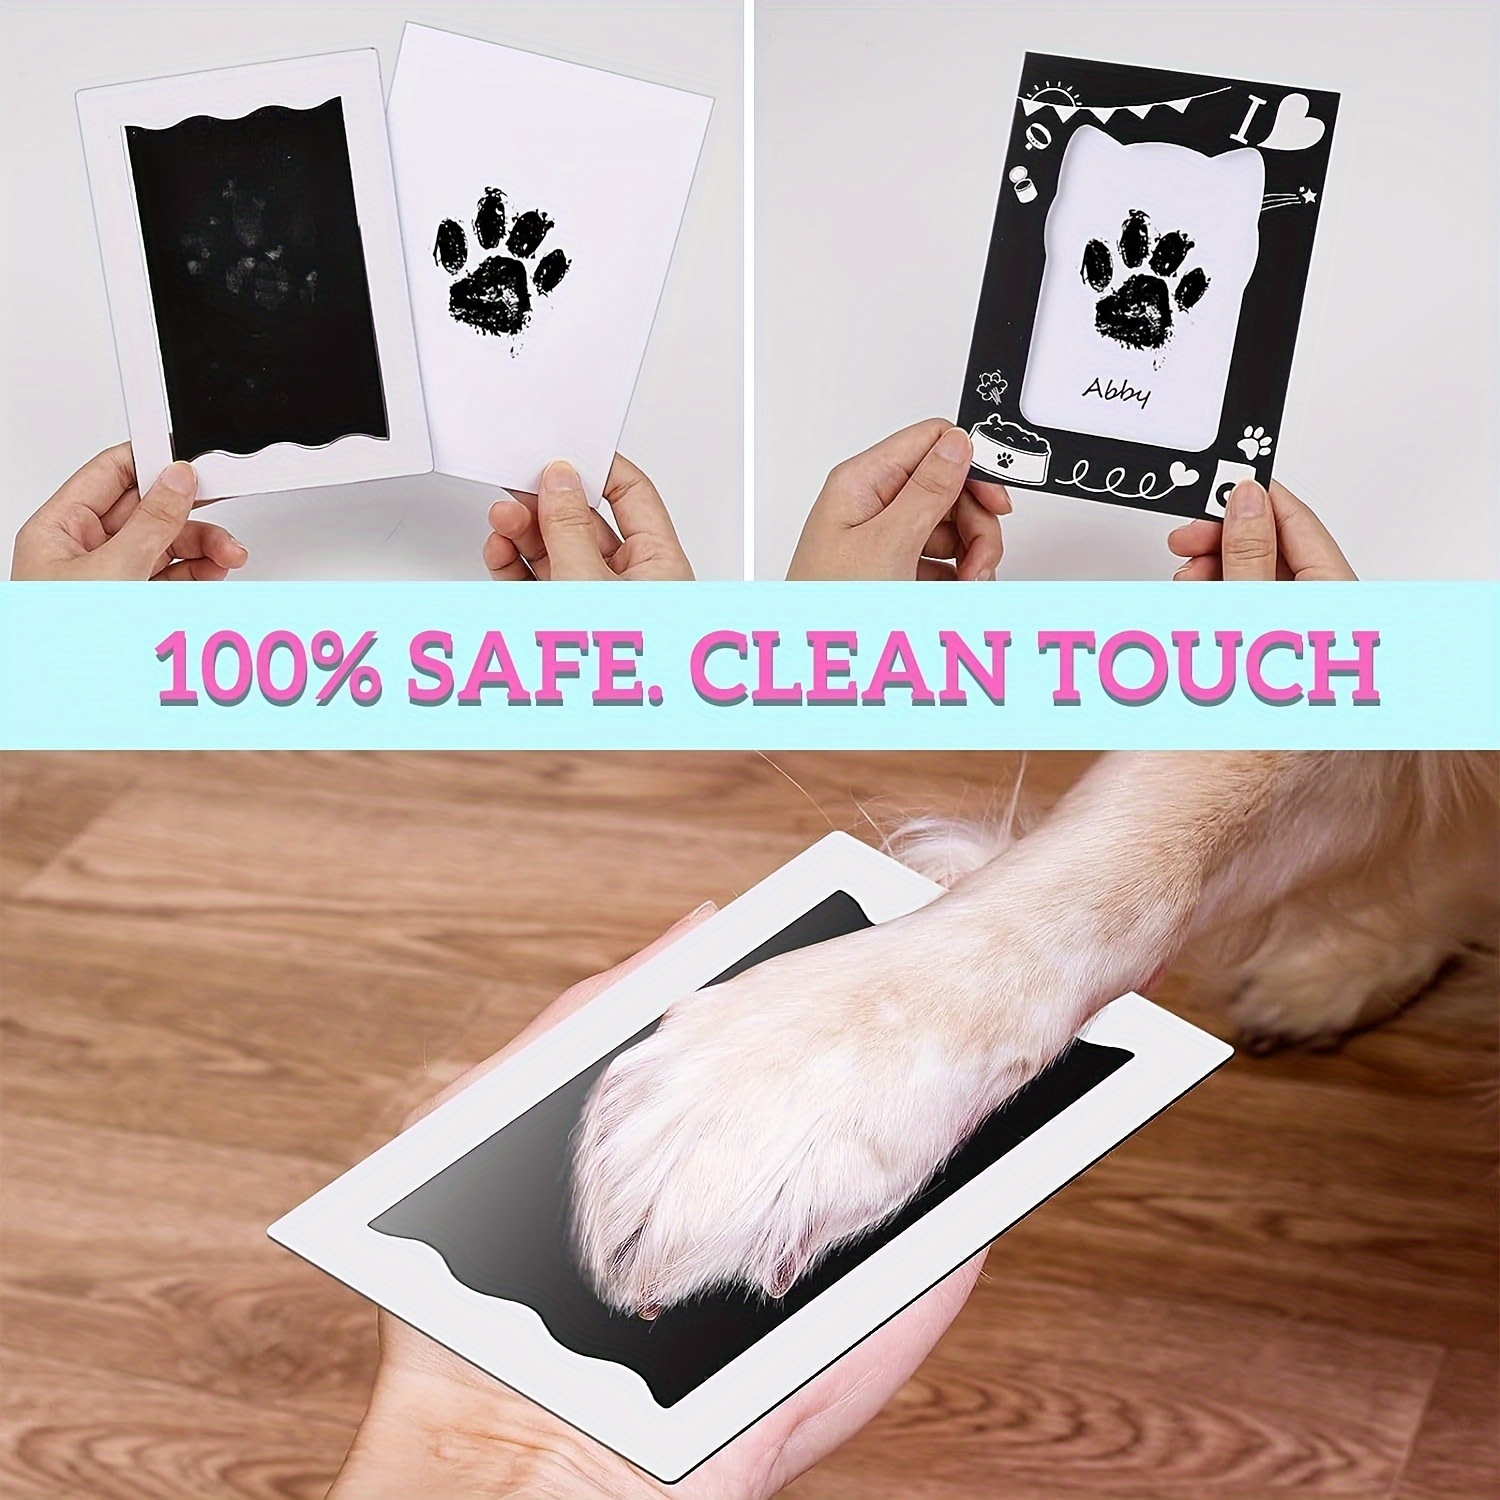 Pet Safe Non-toxic Paw Print Ink Pad Kit